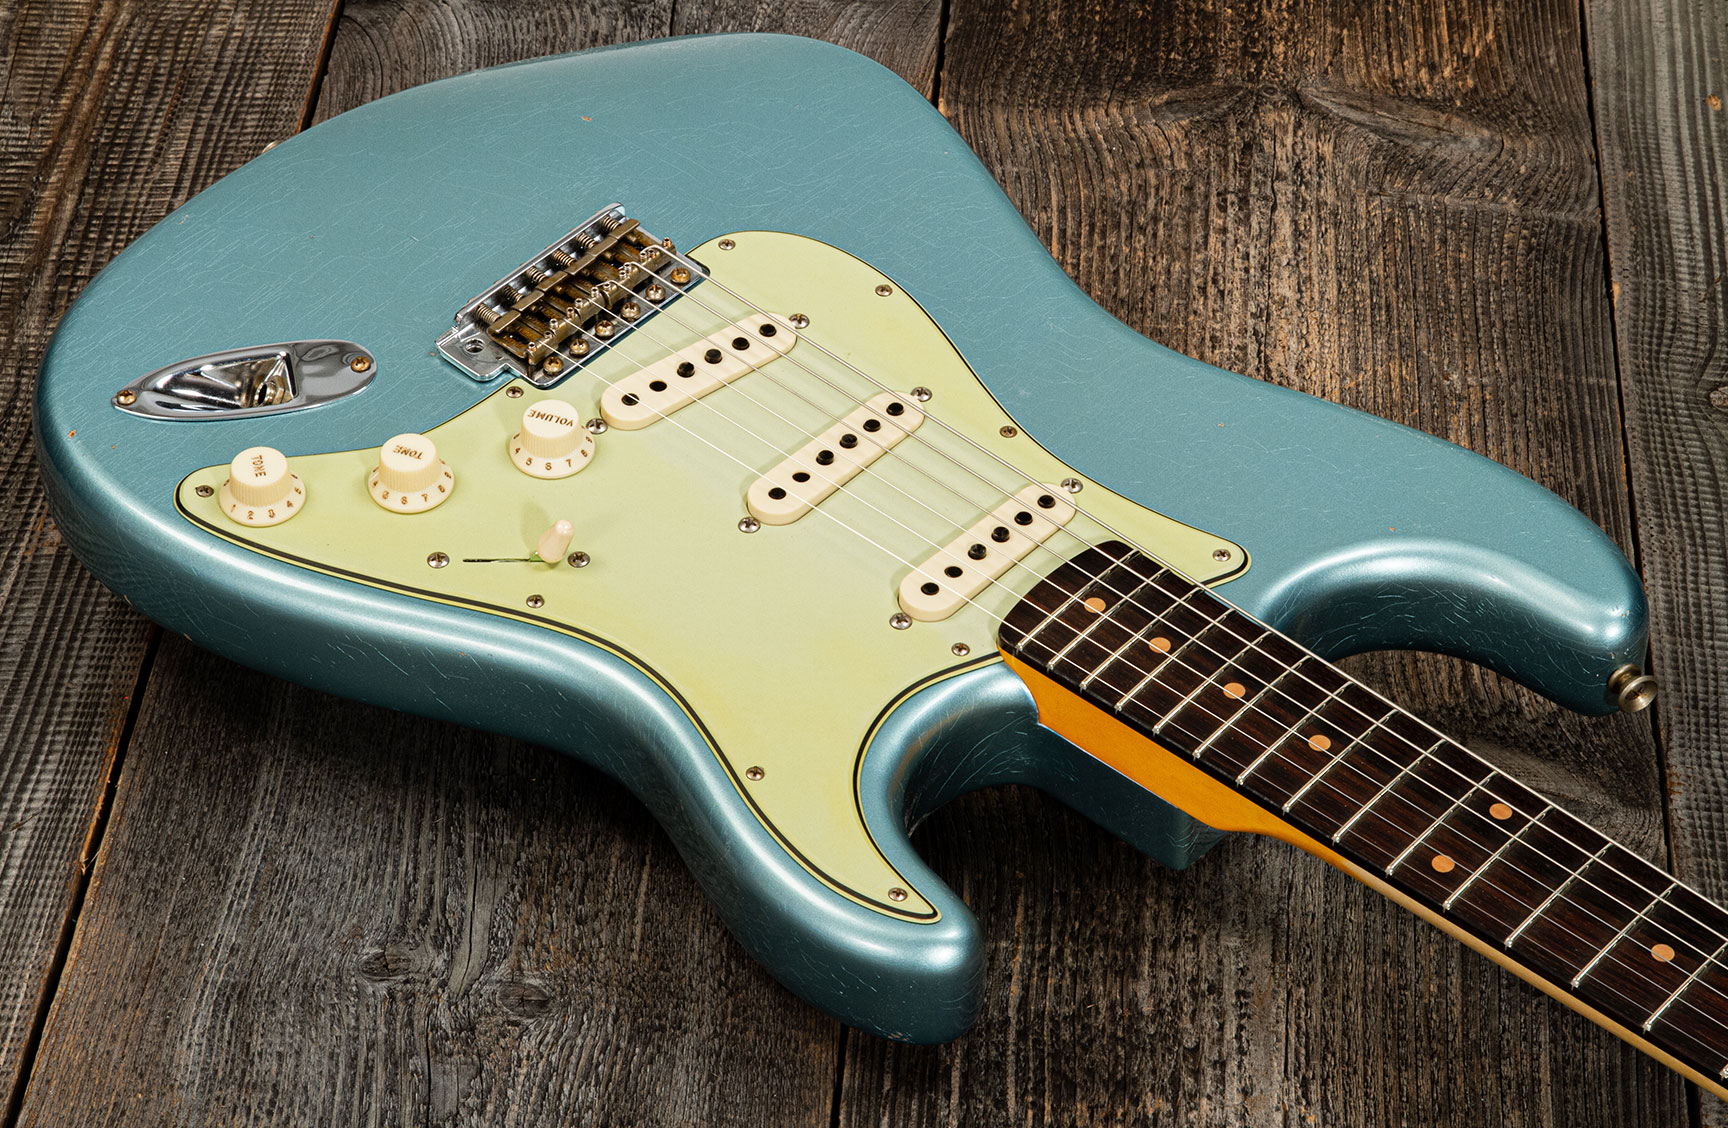 Fender Custom Shop Strat 1959 3s Trem Rw #cz566857 - Journeyman Relic Teal Green Metallic - Str shape electric guitar - Variation 2